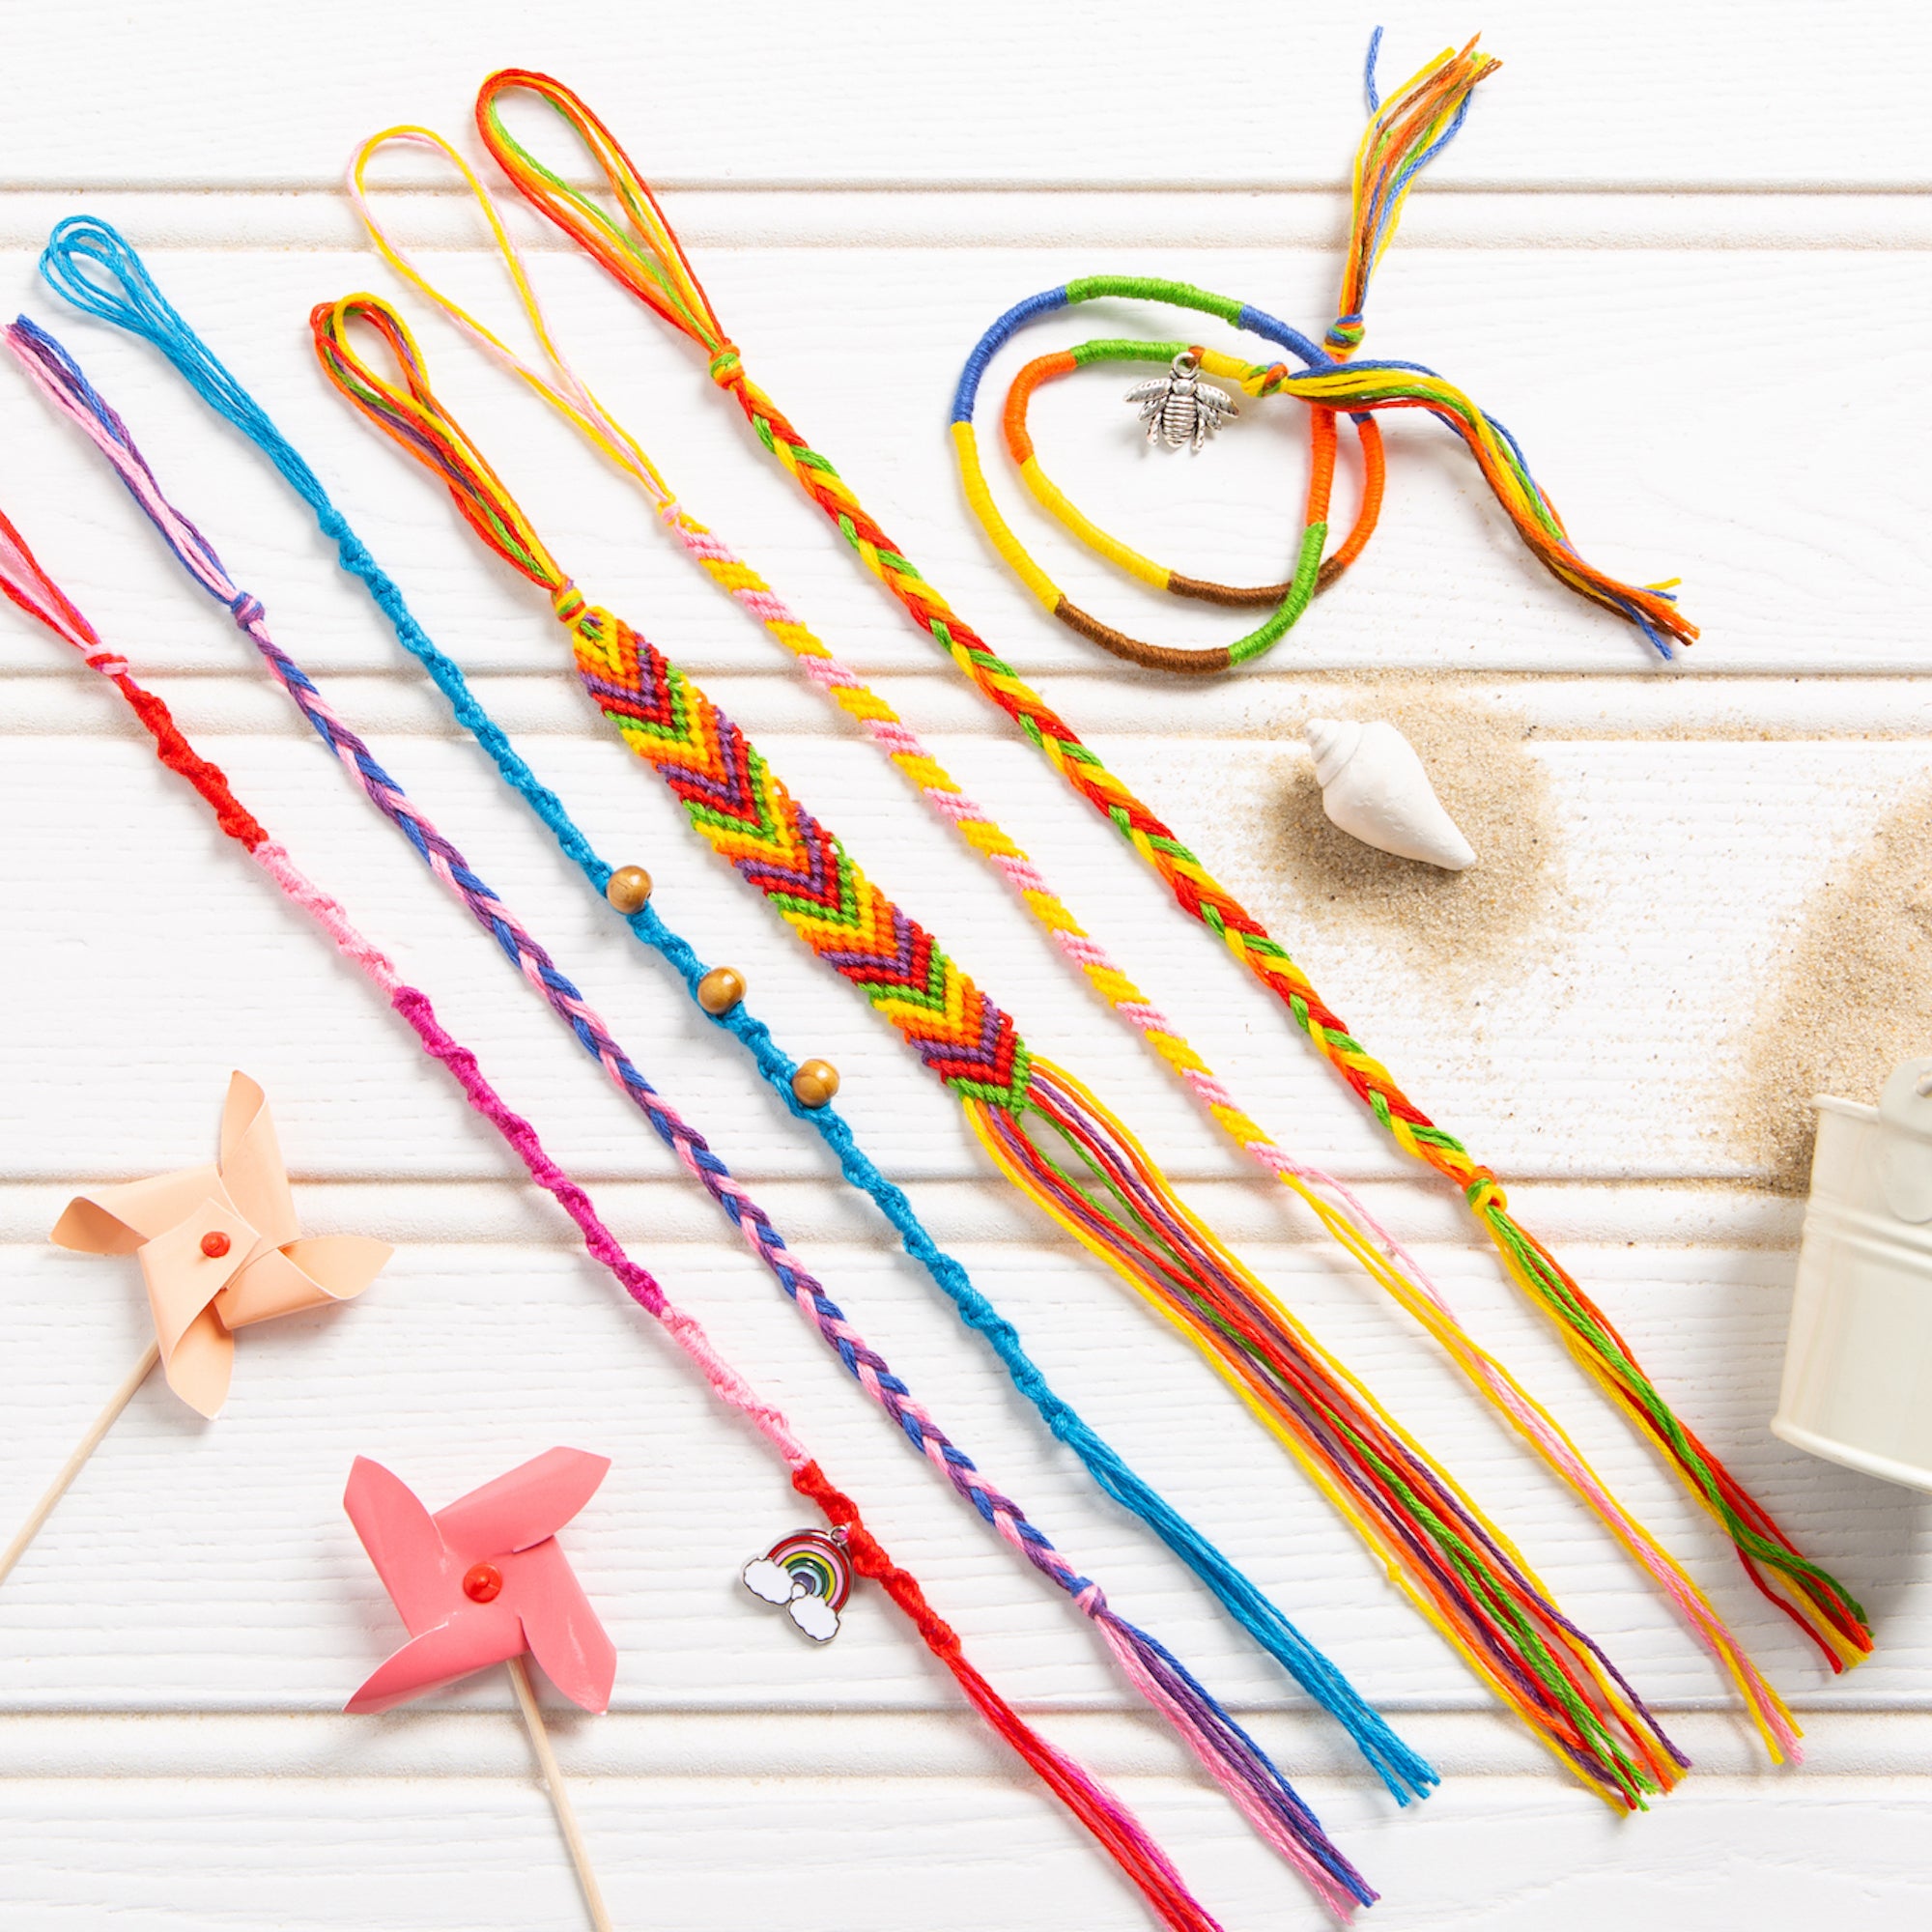 Make Your Own Friendship Bracelet Kit, Kumihimo Disk, DIY Bracelets, Kids  Party Activities, Crafts for Kids 